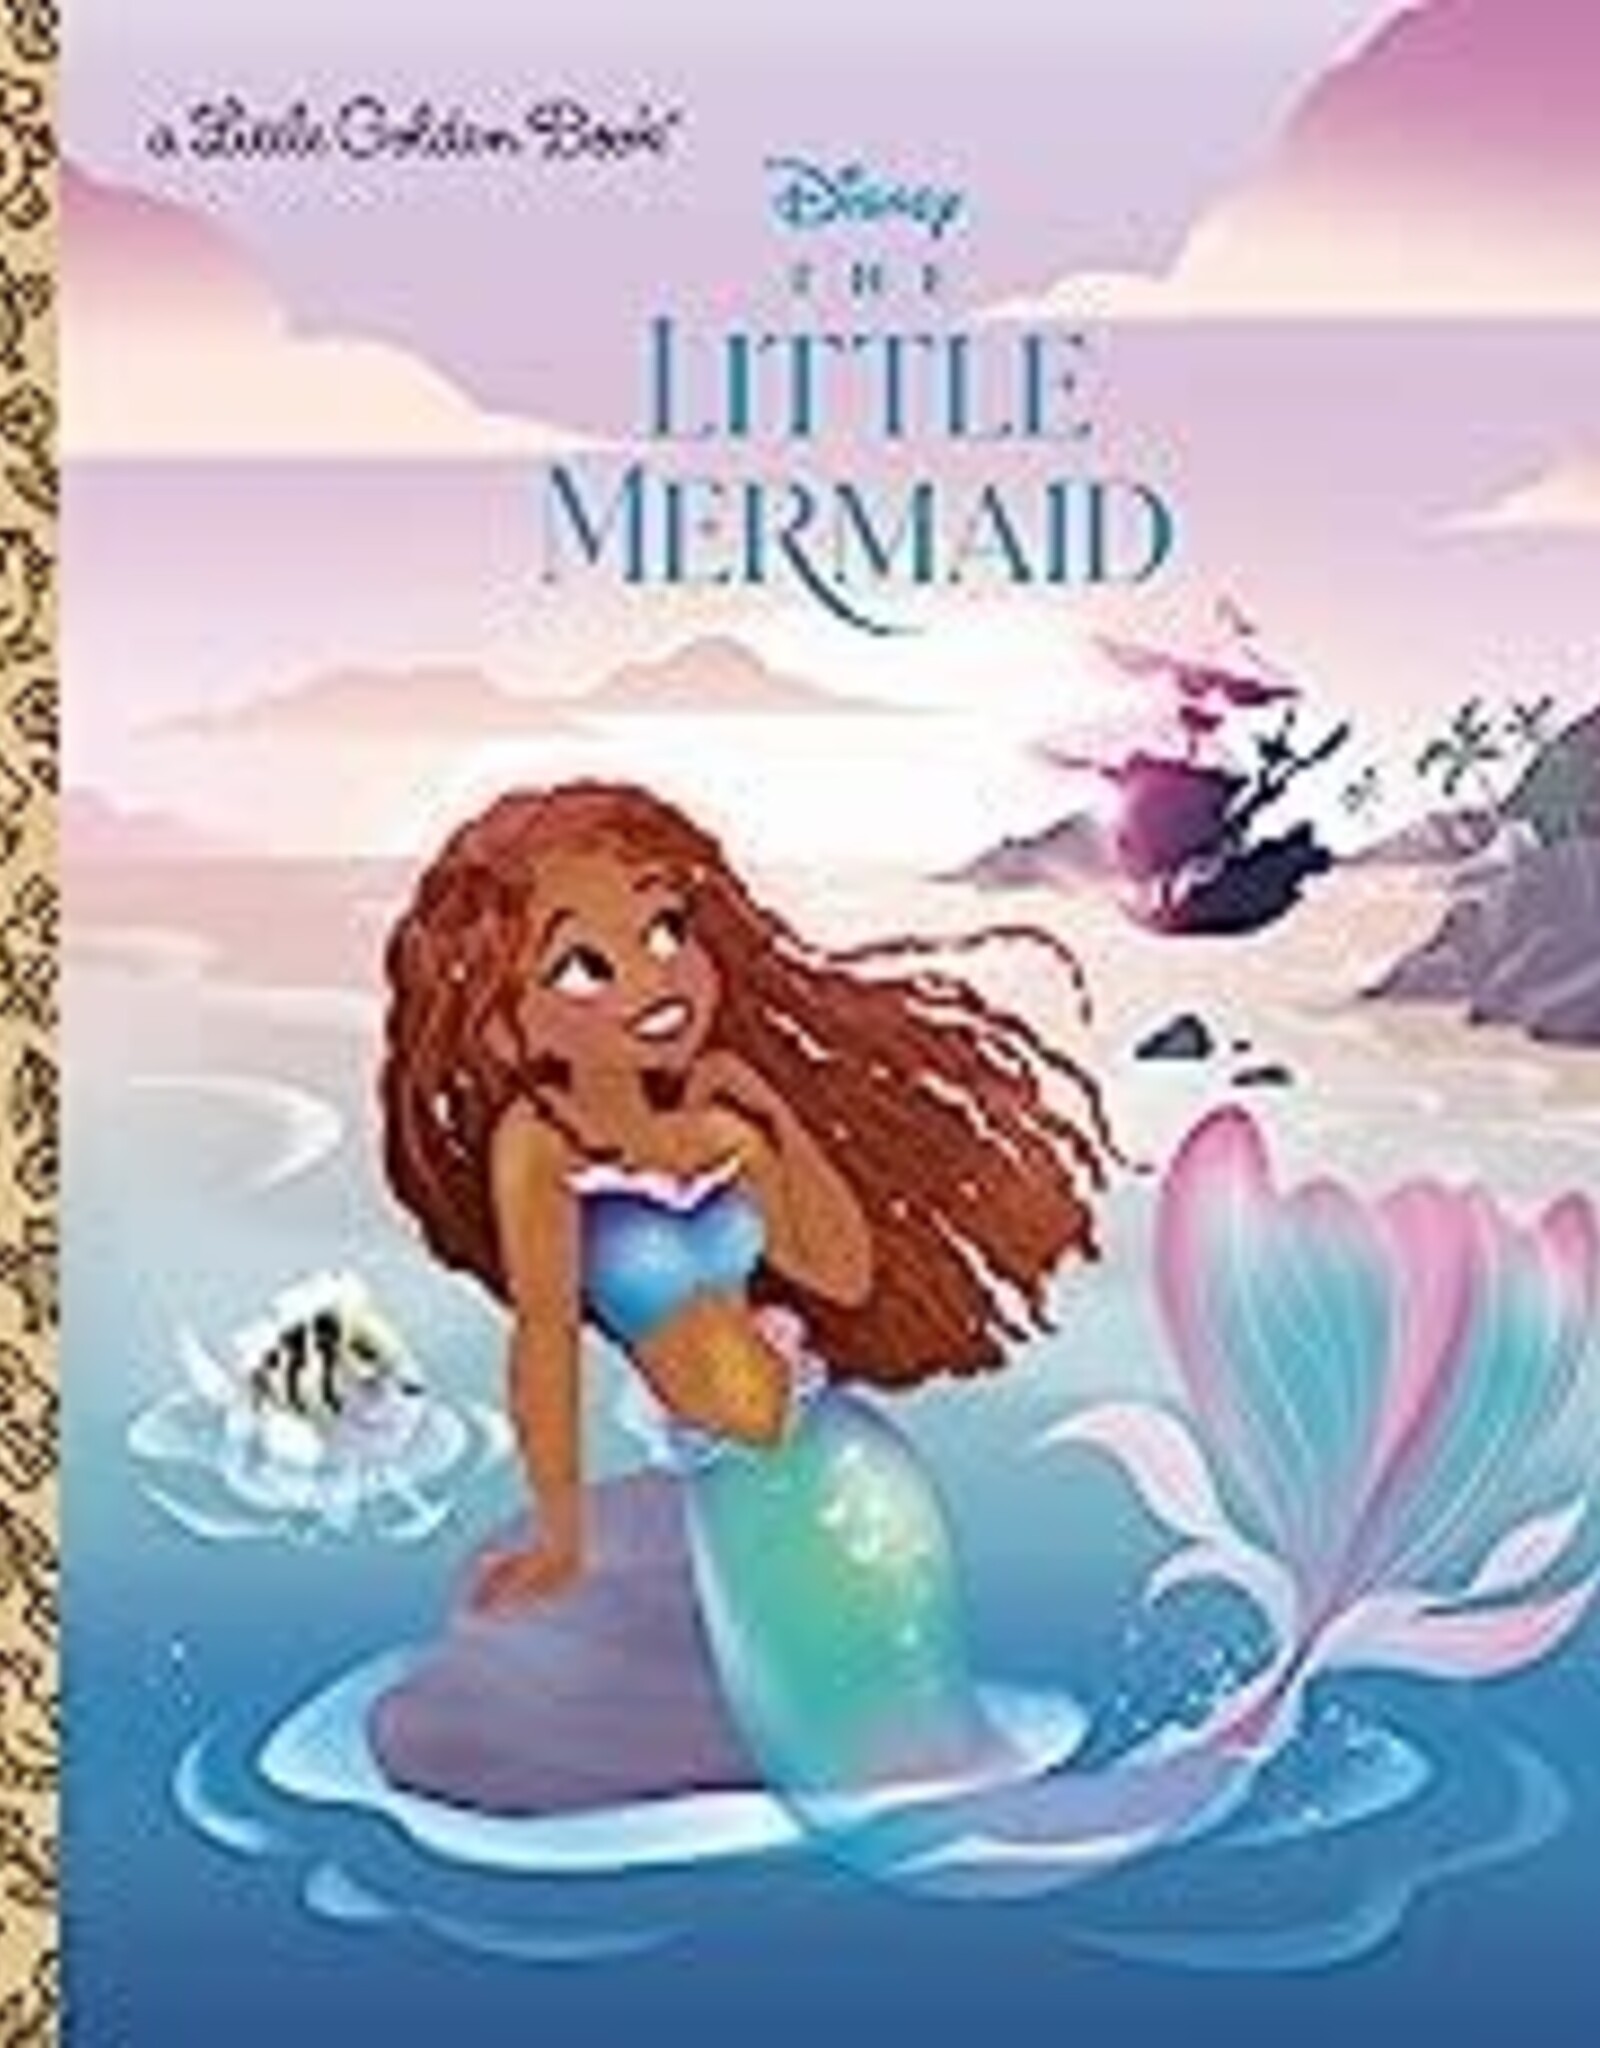 Penguin Random House LGB The Little Mermaid